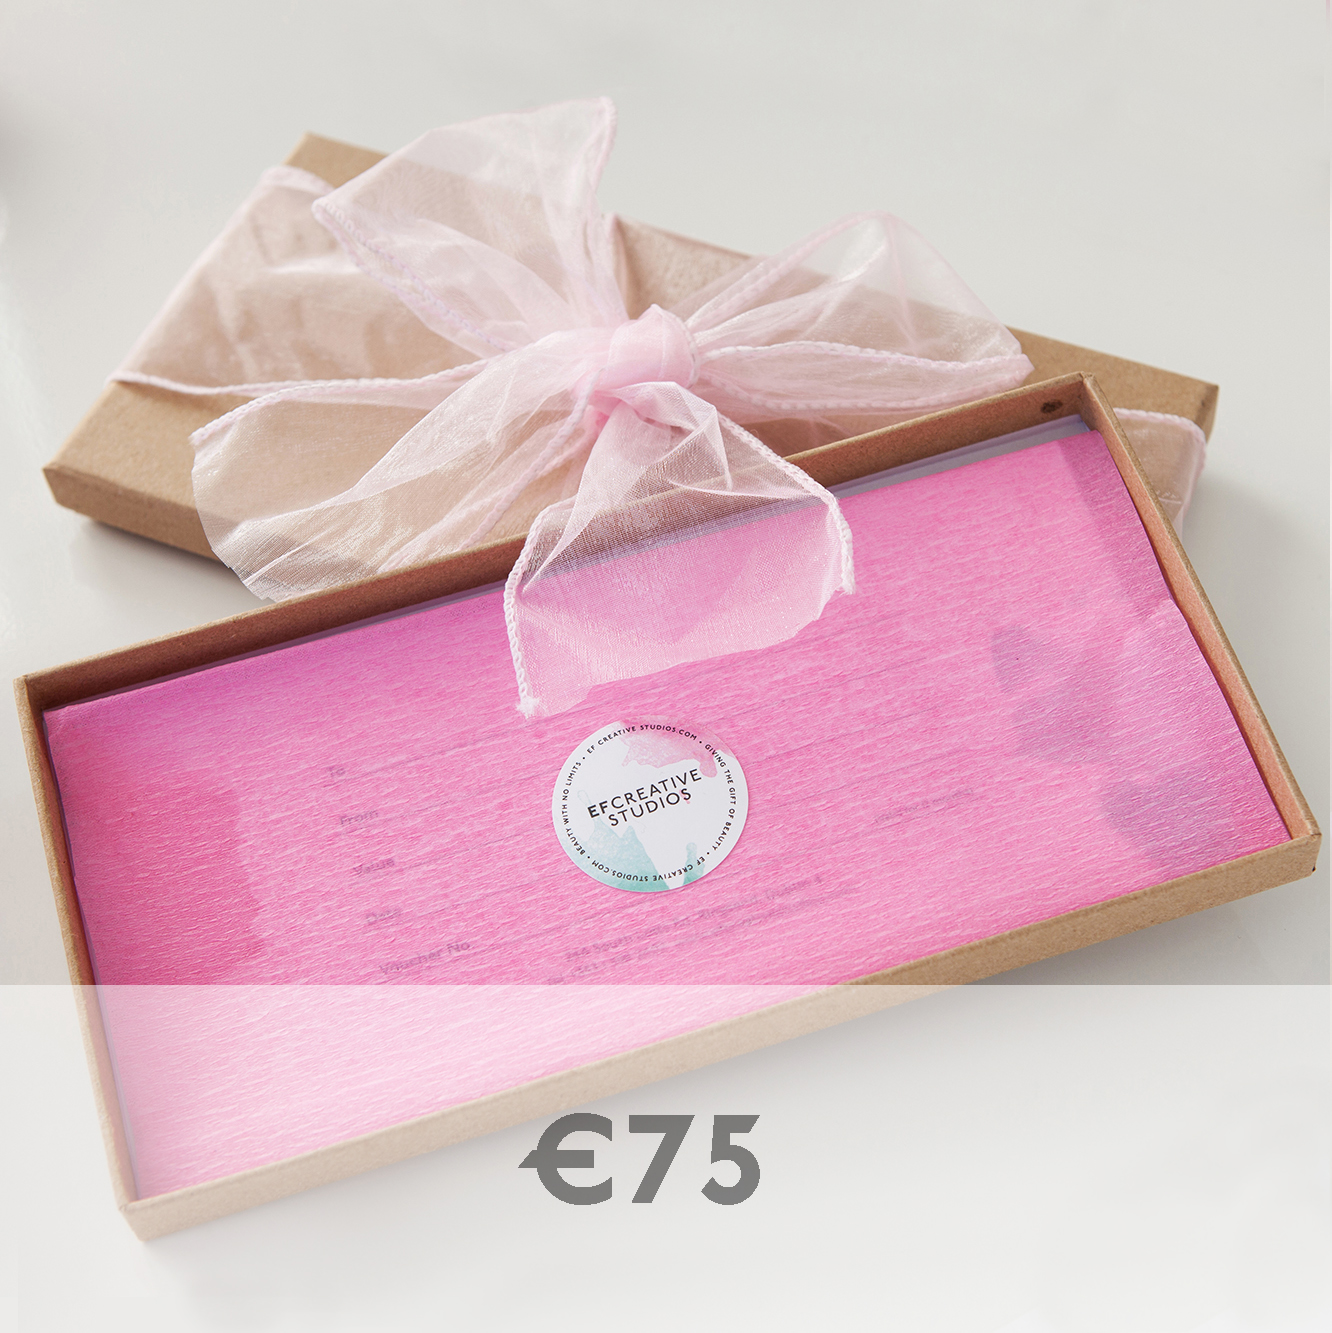 €75 gift idea for mom, sister or female loved one